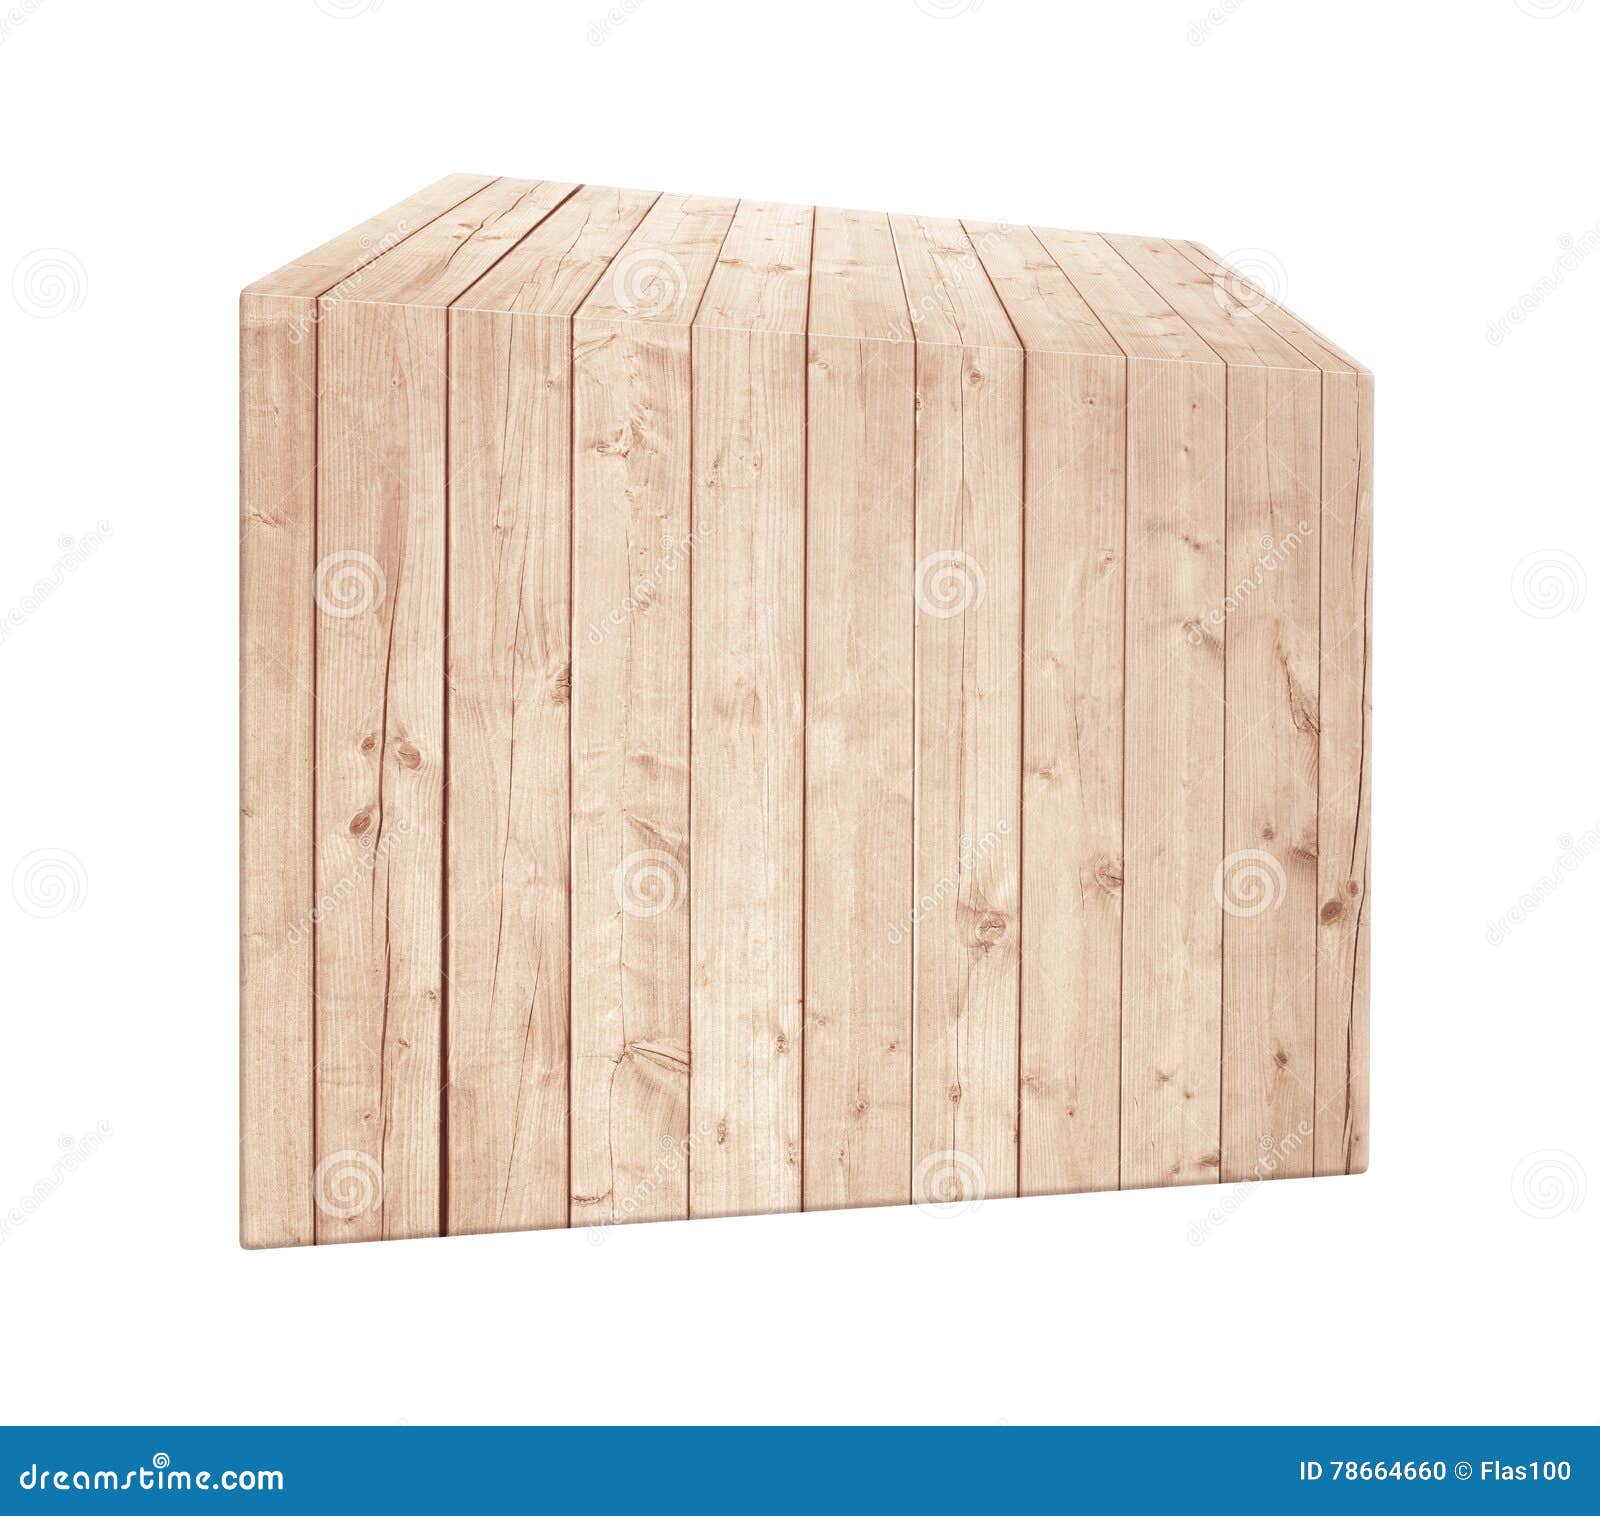 asymmetrical light brown wooden box in vertical position.